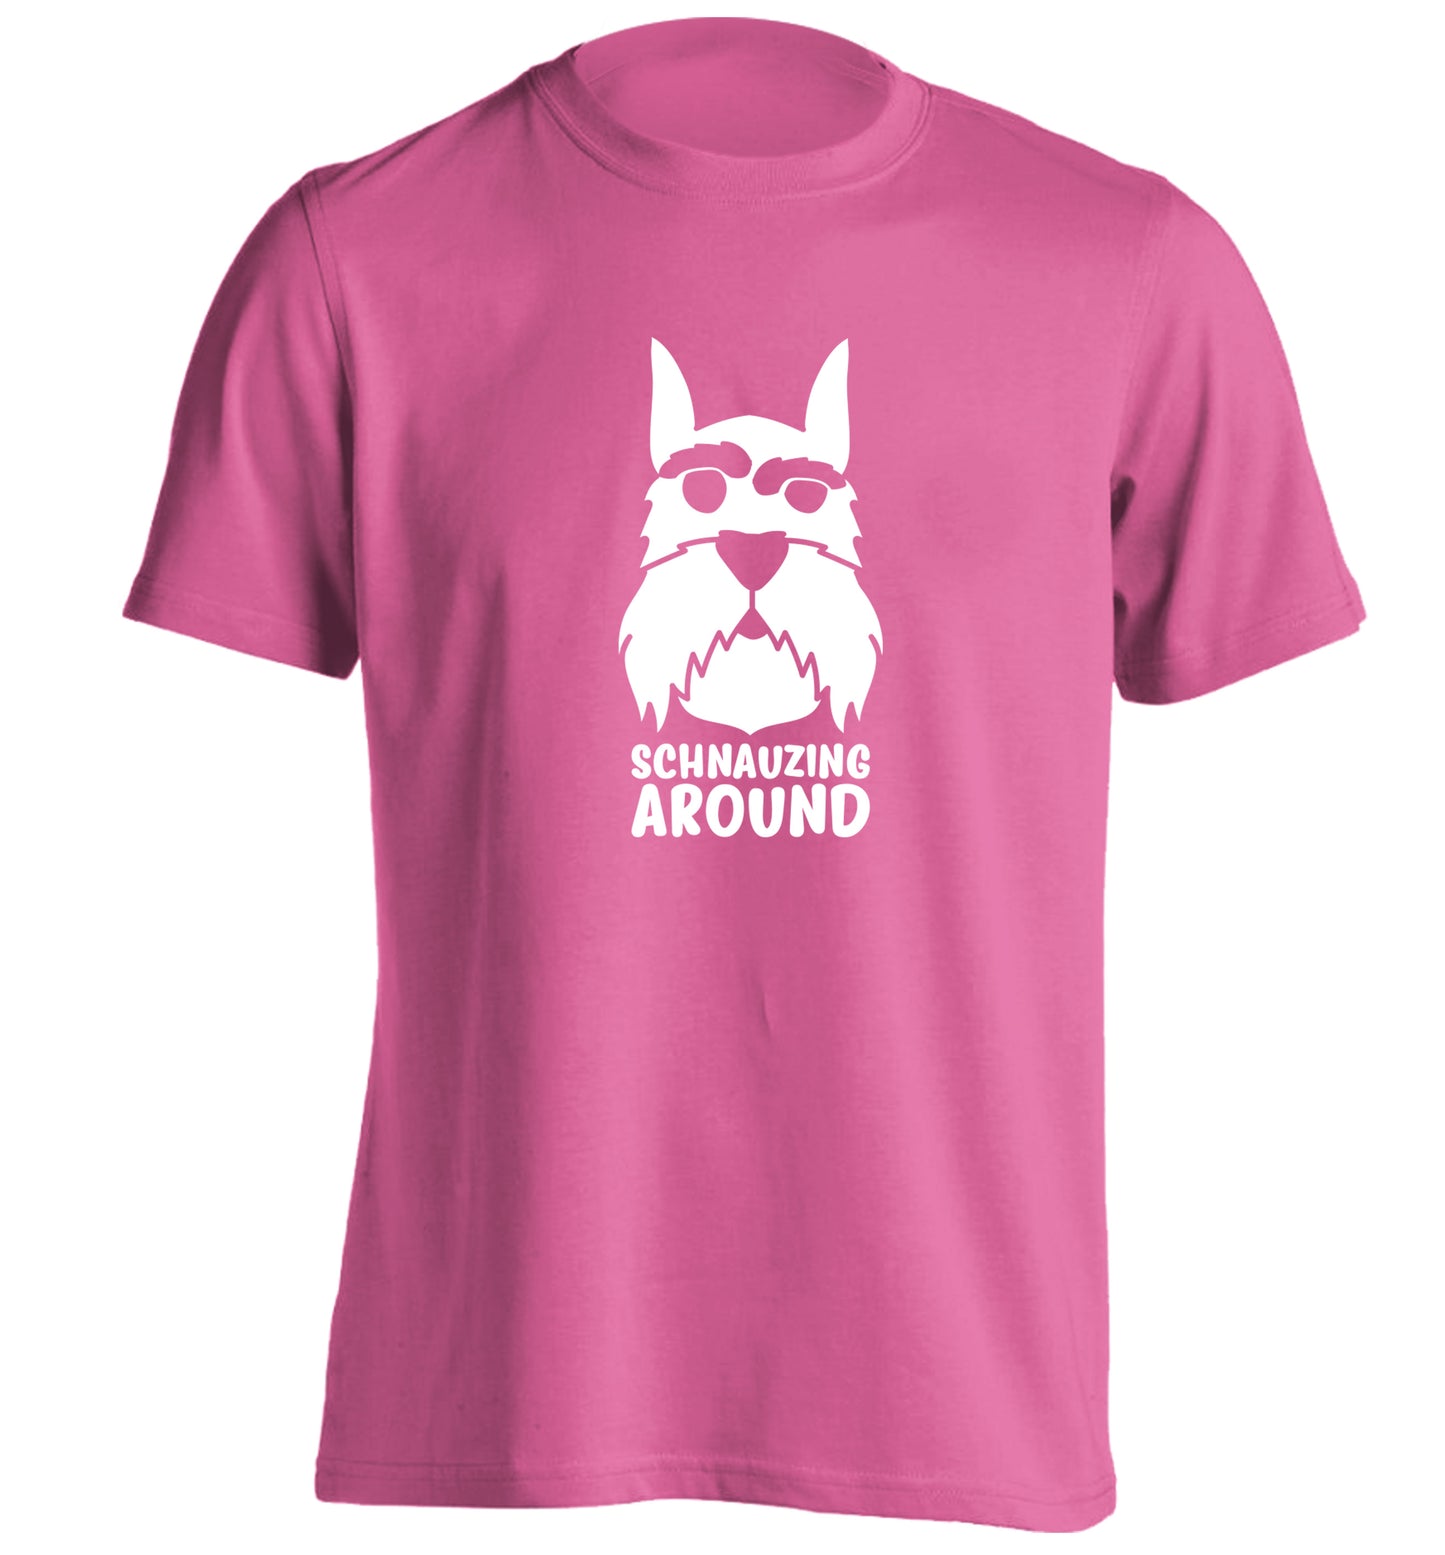 Schnauzing Around adults unisex pink Tshirt 2XL